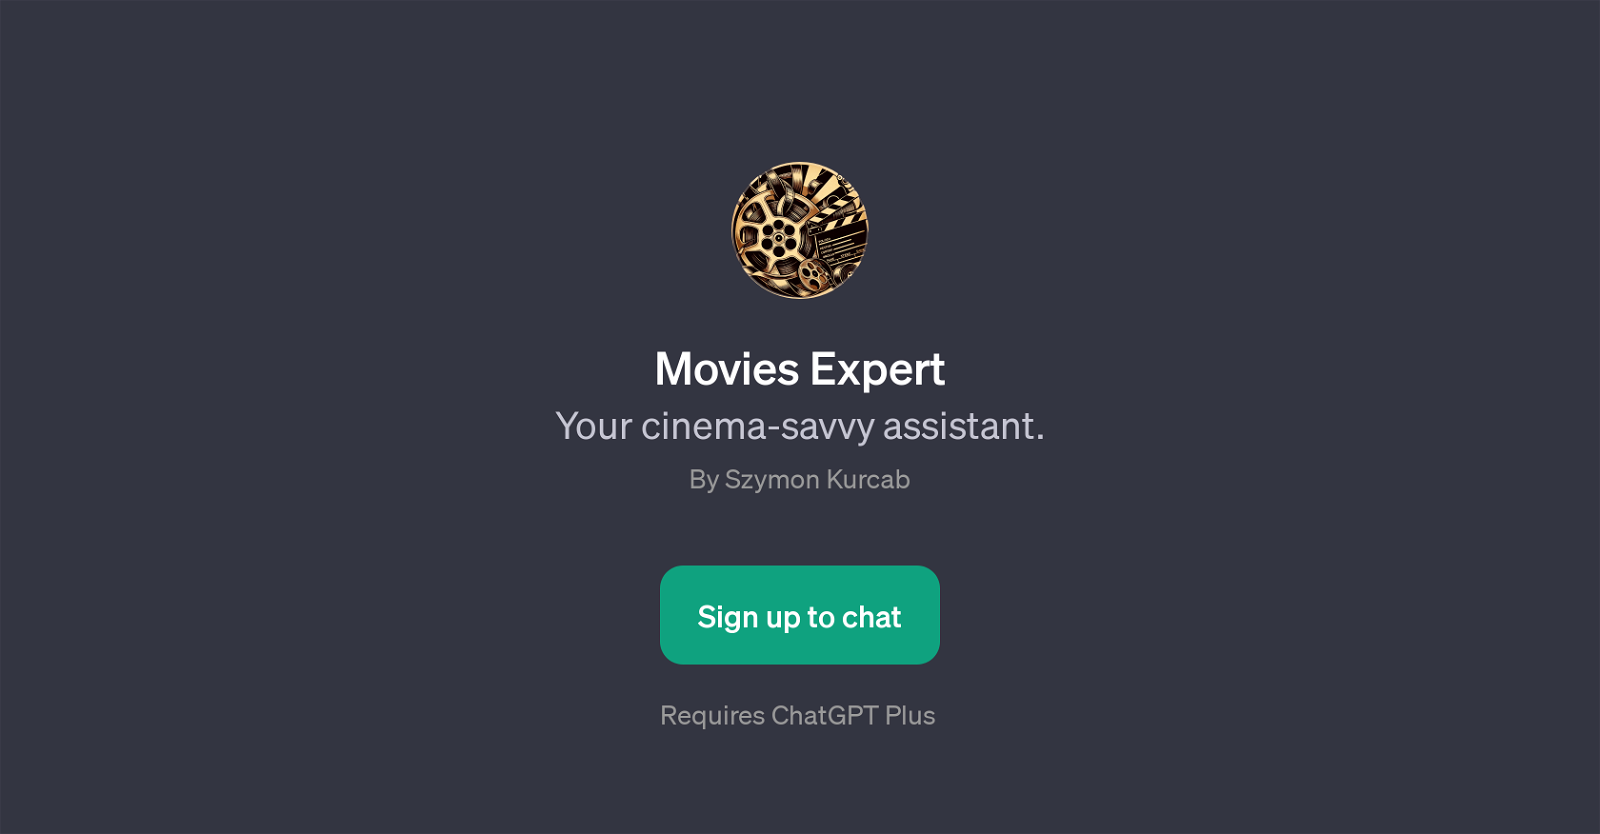 Movies Expert website